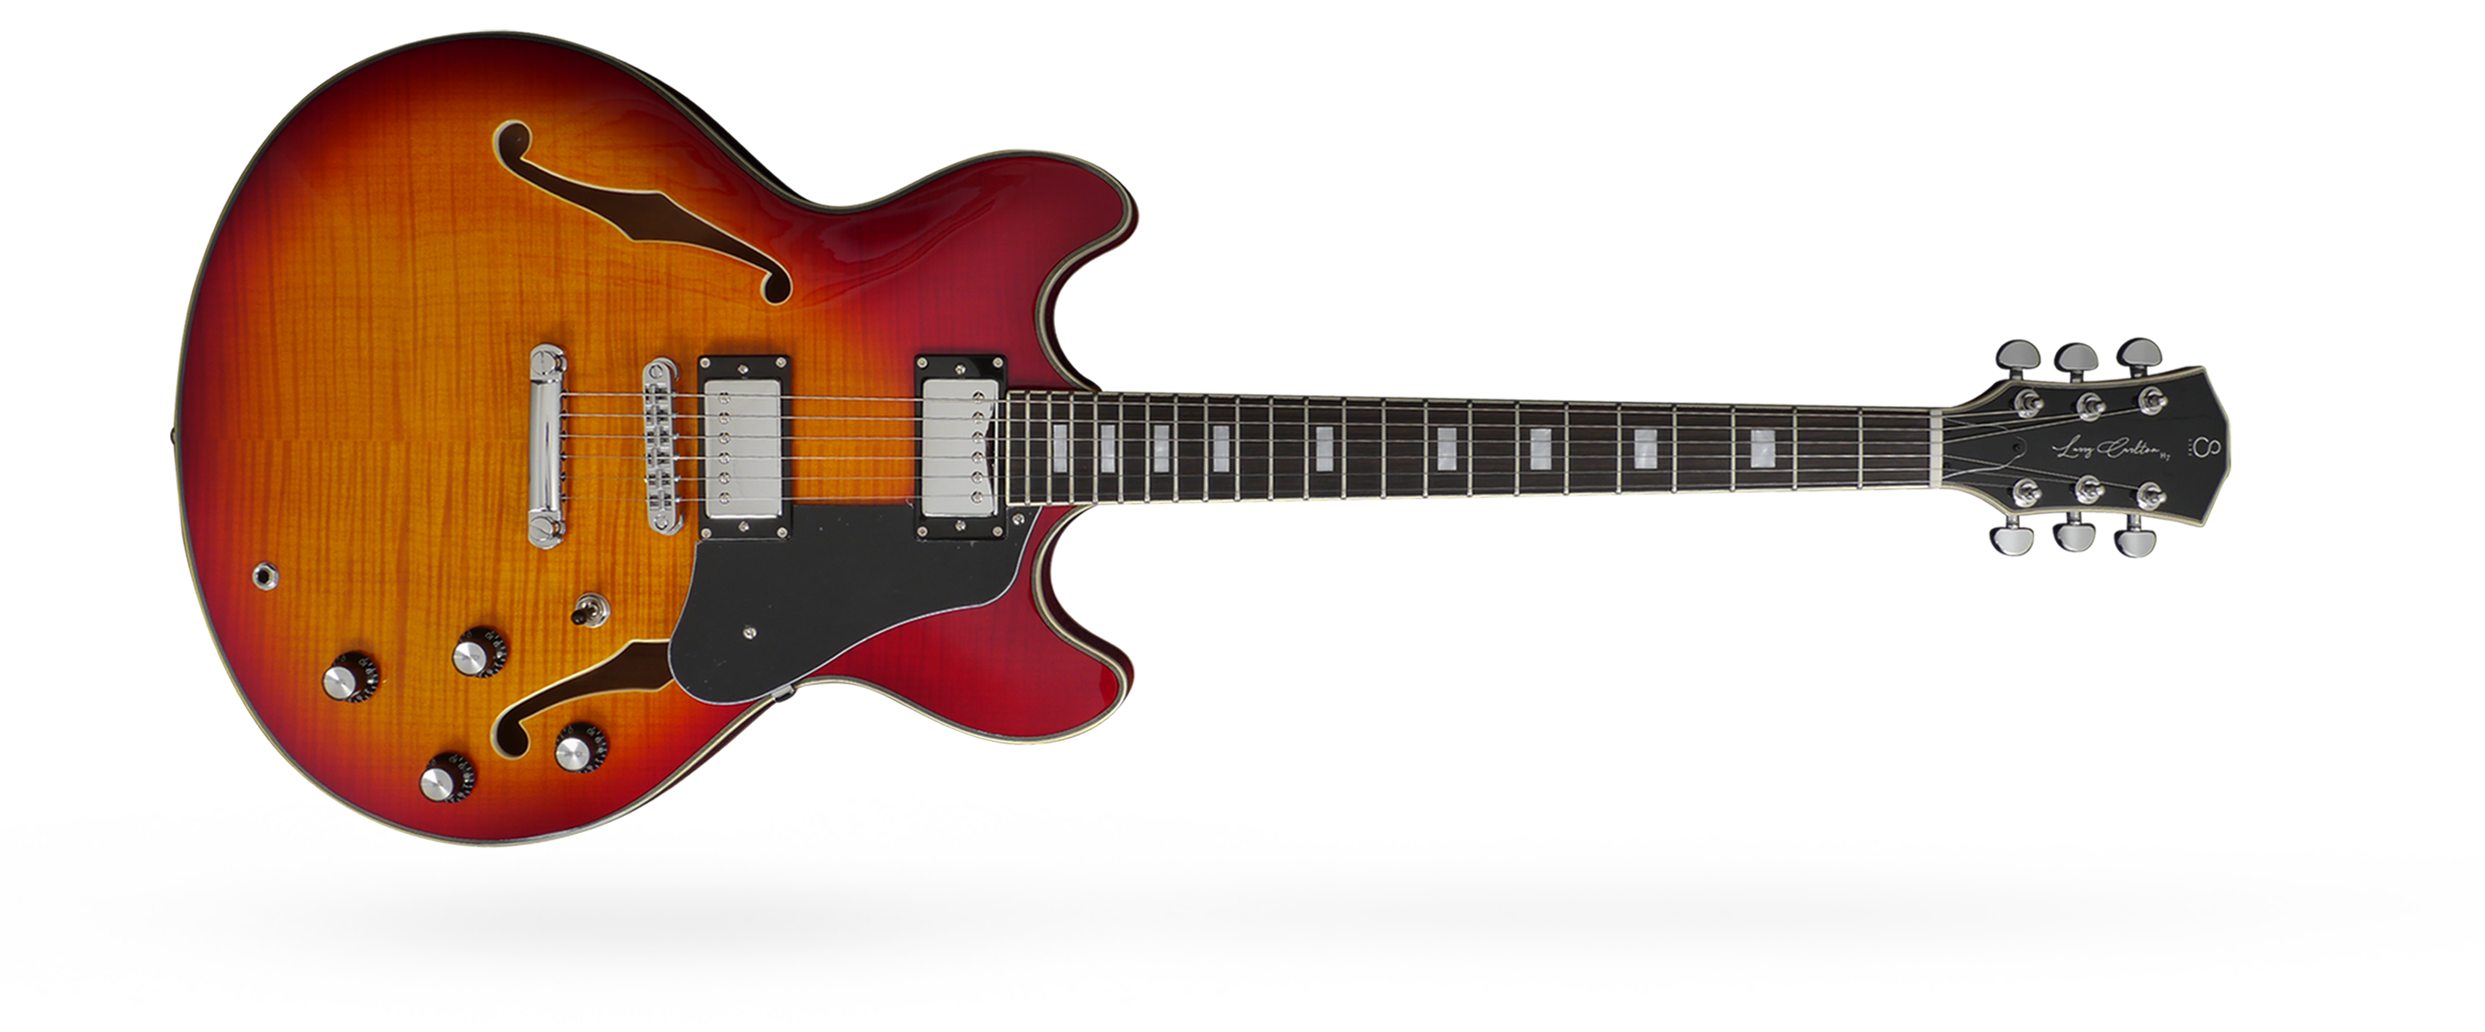 What is your dream signature guitar?-h7_cs_8bcb5db6-6328-47f9-bf02-720e3ec9c16d-png